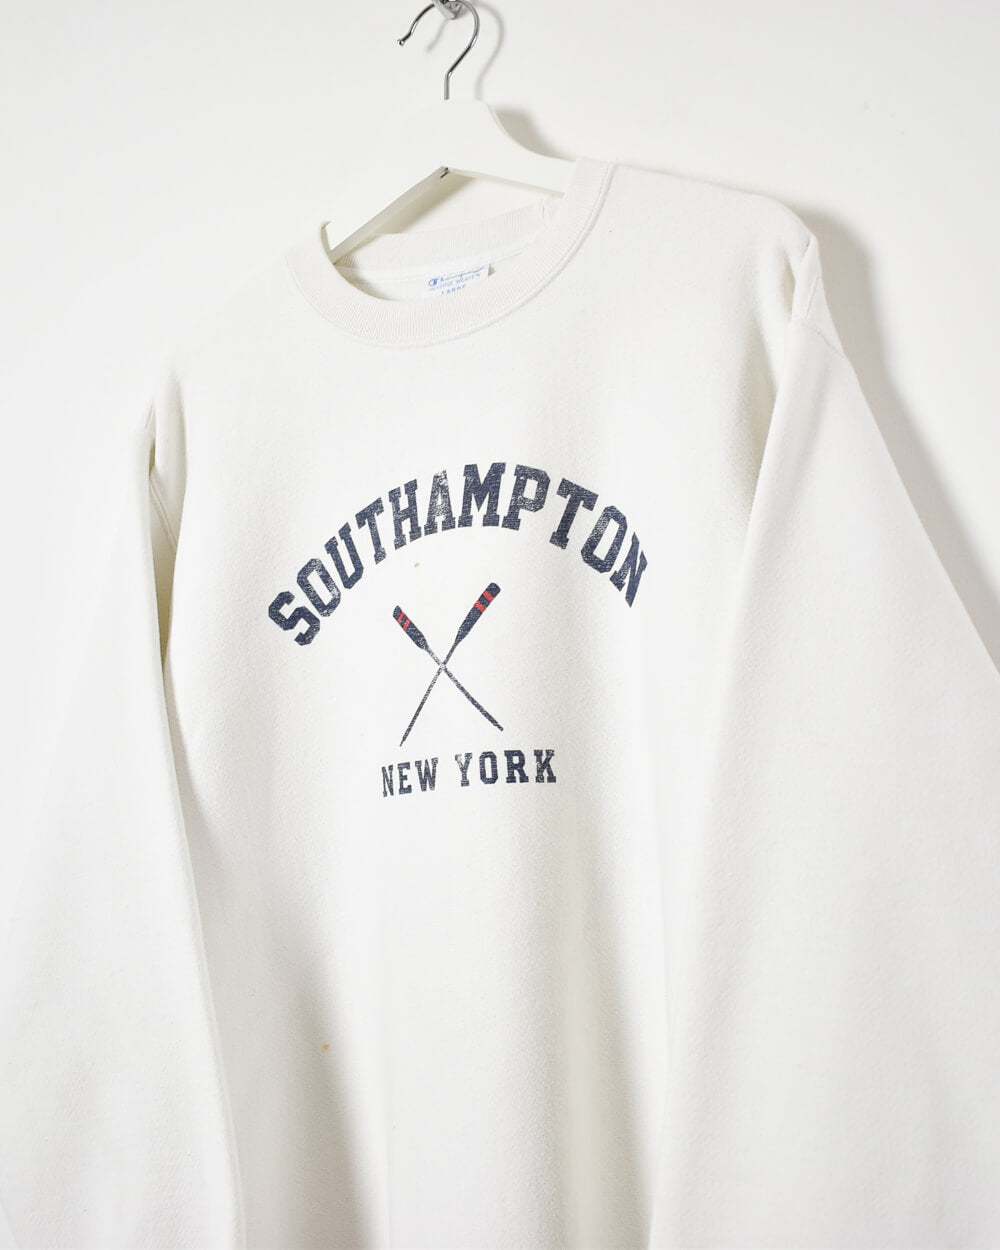 Champion Southampton New York Reverse Weave Sweatshirt - Large - Domno Vintage 90s, 80s, 00s Retro and Vintage Clothing 